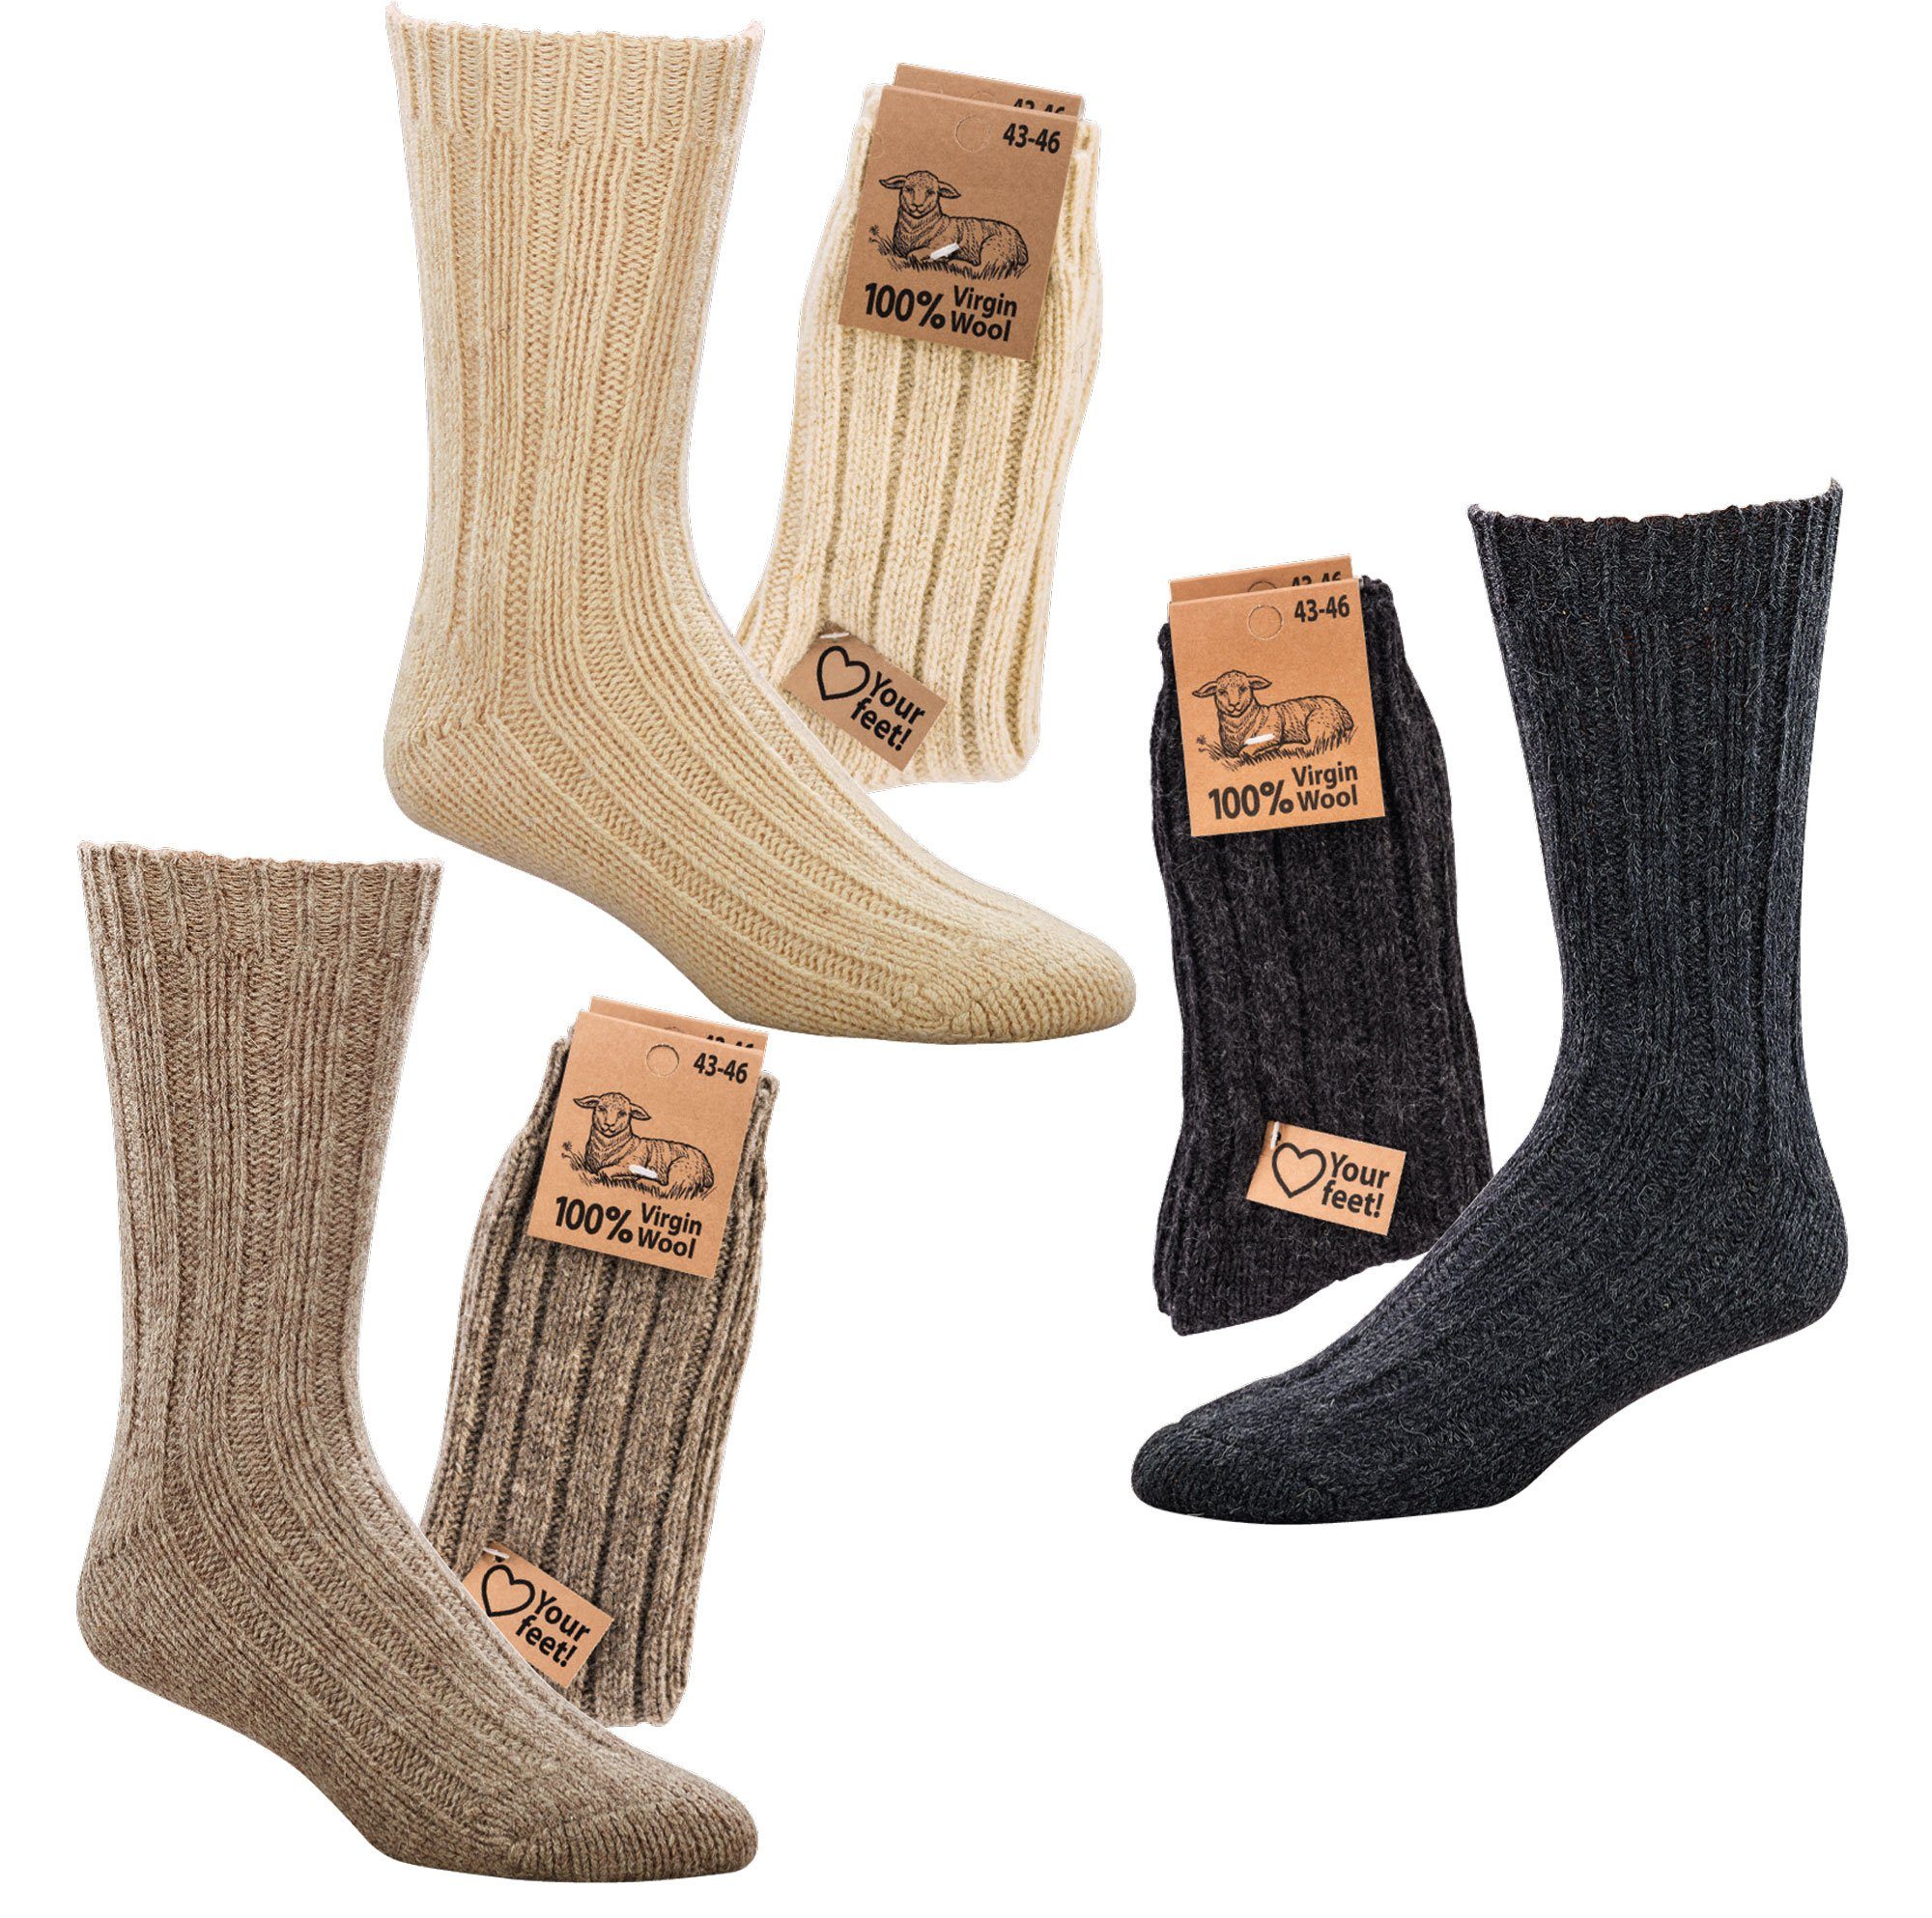 Wowerat Socken Warme Wollsocken 100% "Virgin Wool" Grobstrick Schafwolle (2 Paar) braun